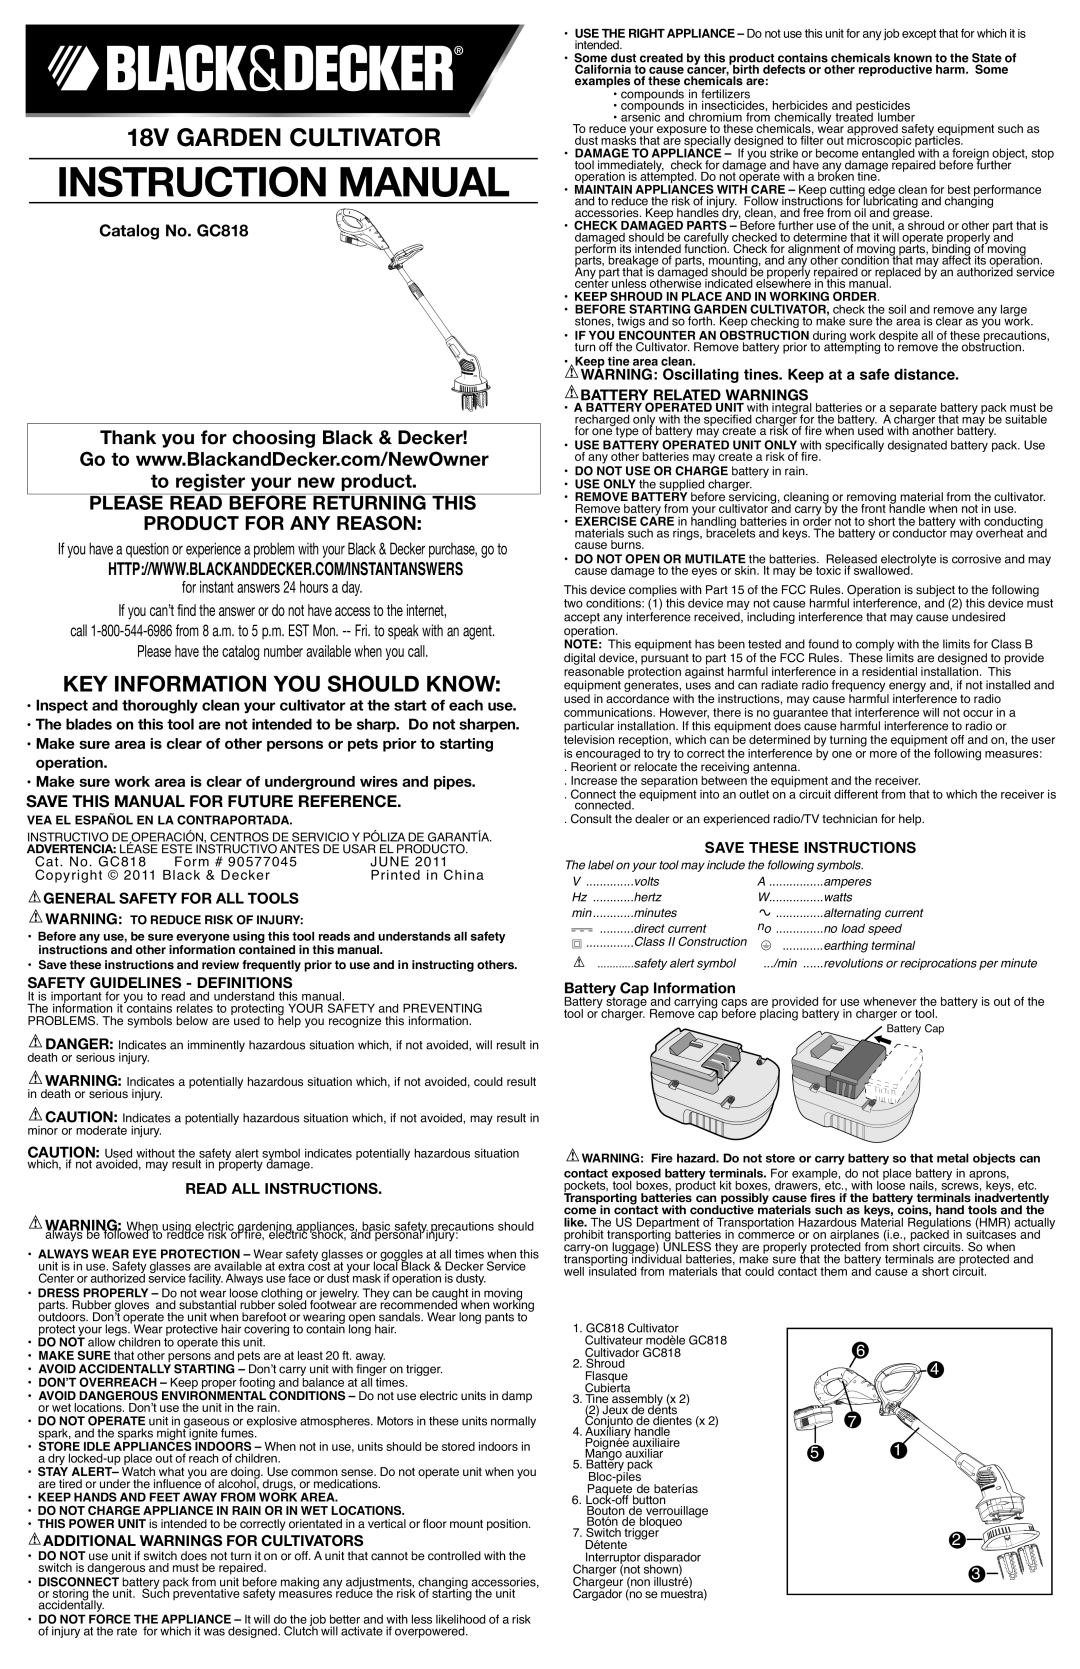 Black & Decker GC818R instruction manual 18V GARDEN CULTIVATOR, Key Information You Should Know, Instructionmanual 